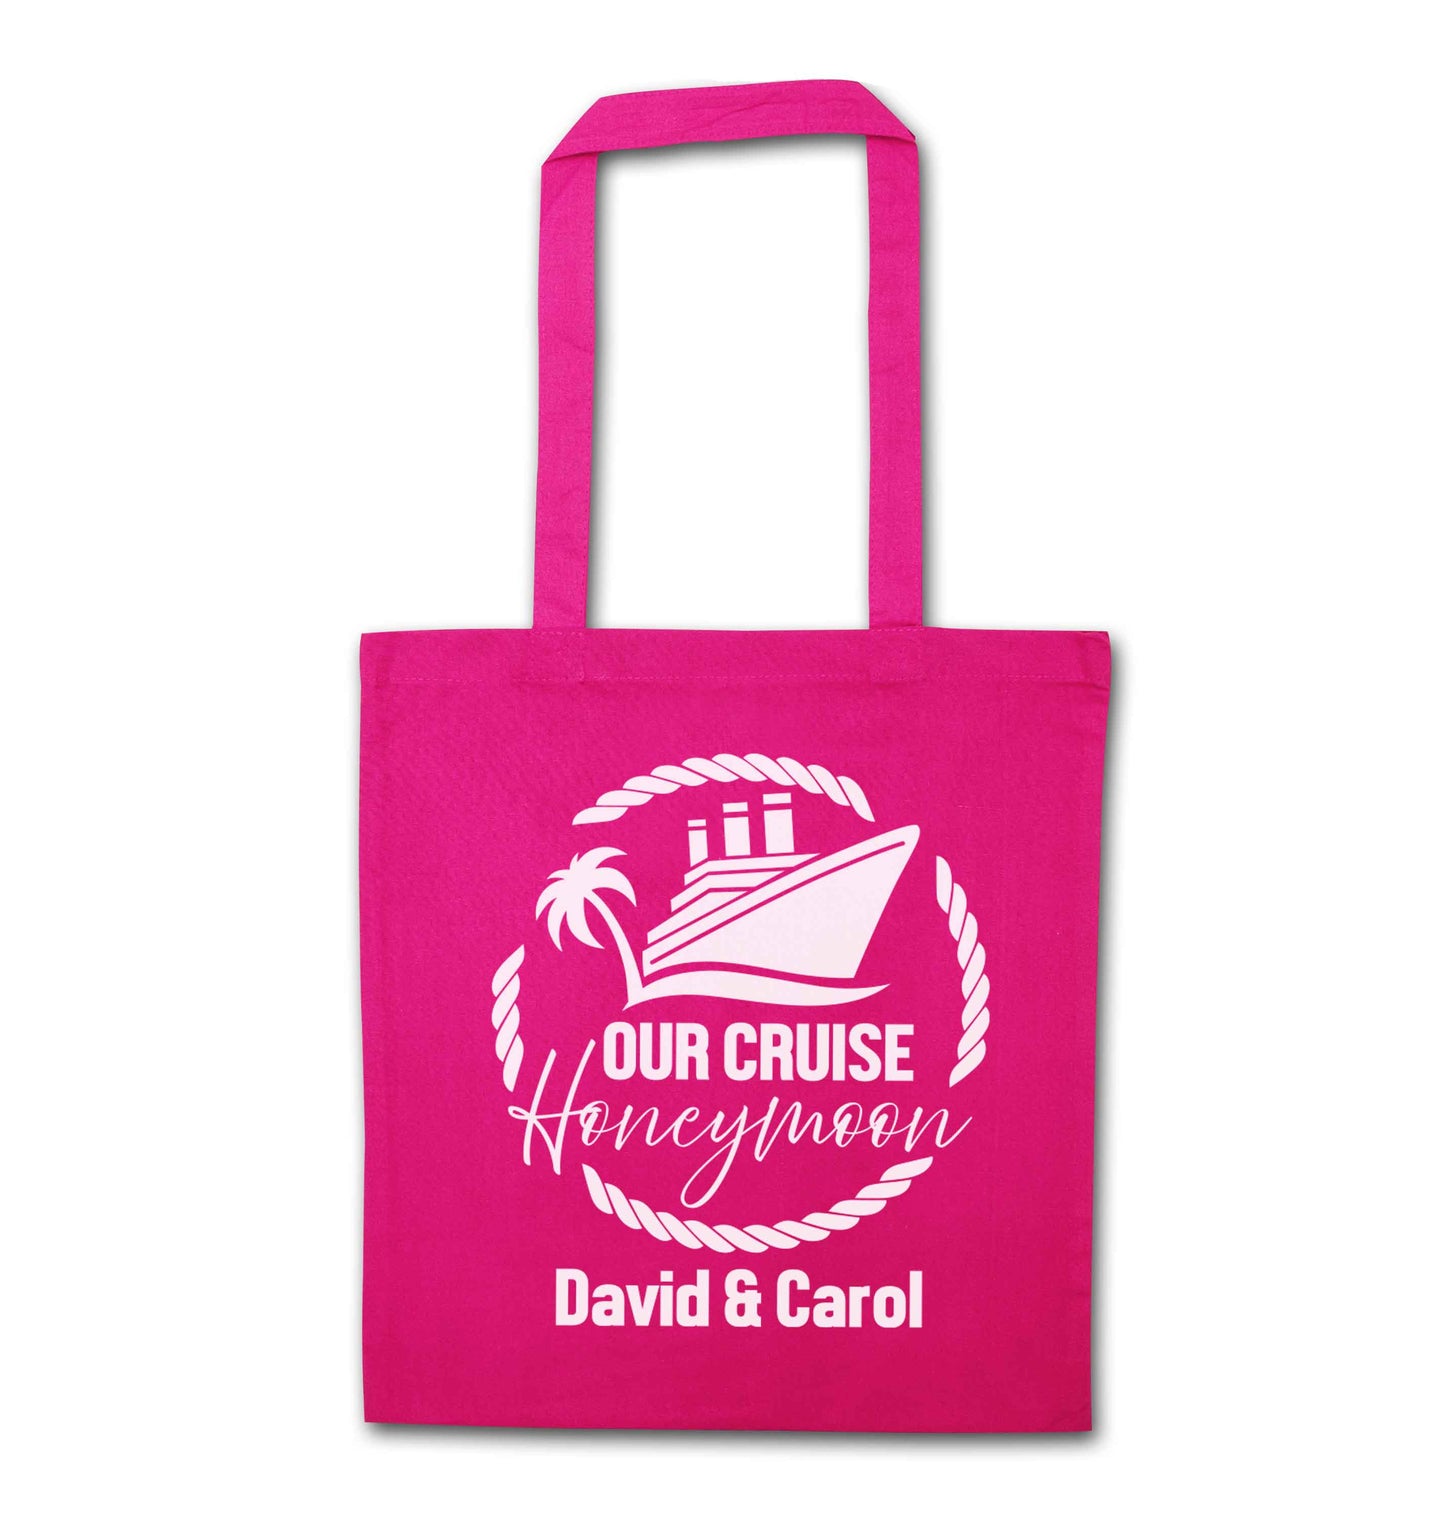 Our cruise honeymoon personalised pink tote bag